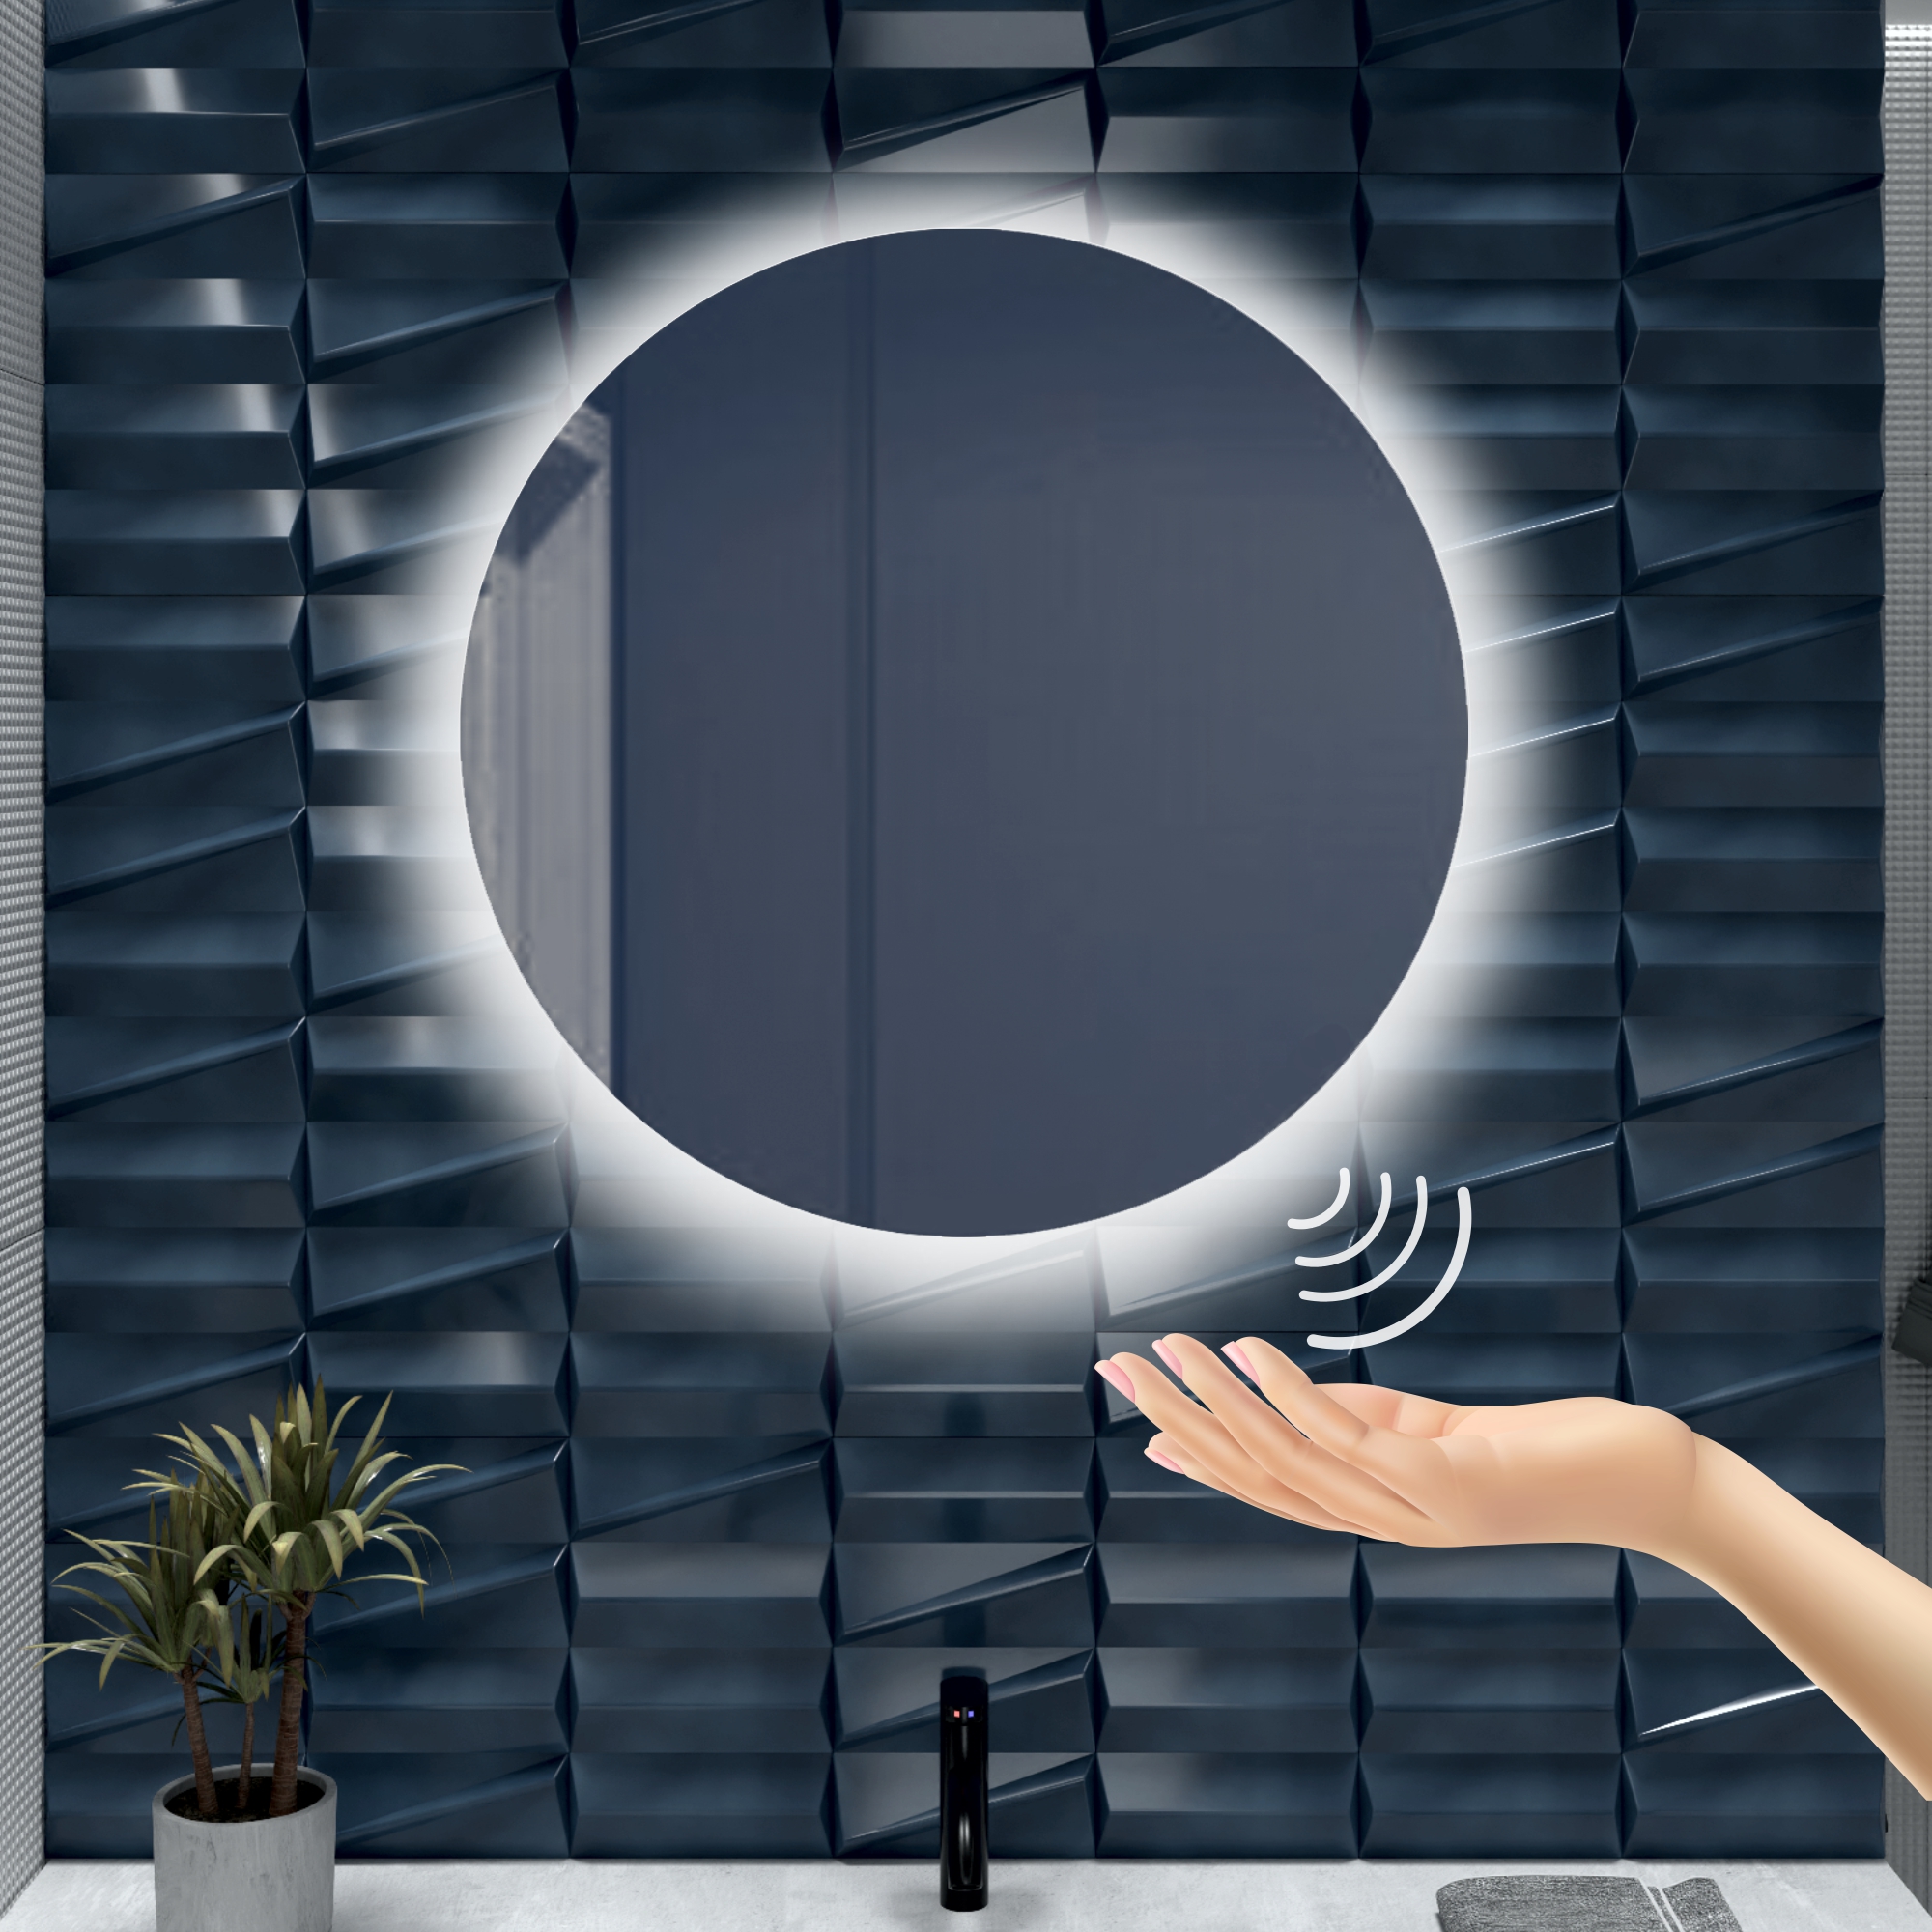 Зеркало для ванной Alfa Mirrors с холодной подсветкой 6500К круглое 90см, арт. Na-9Vzd зеркало для ванной alfa mirrors с холодной подсветкой 6500к прямоуг 50х60см арт ek 56ah